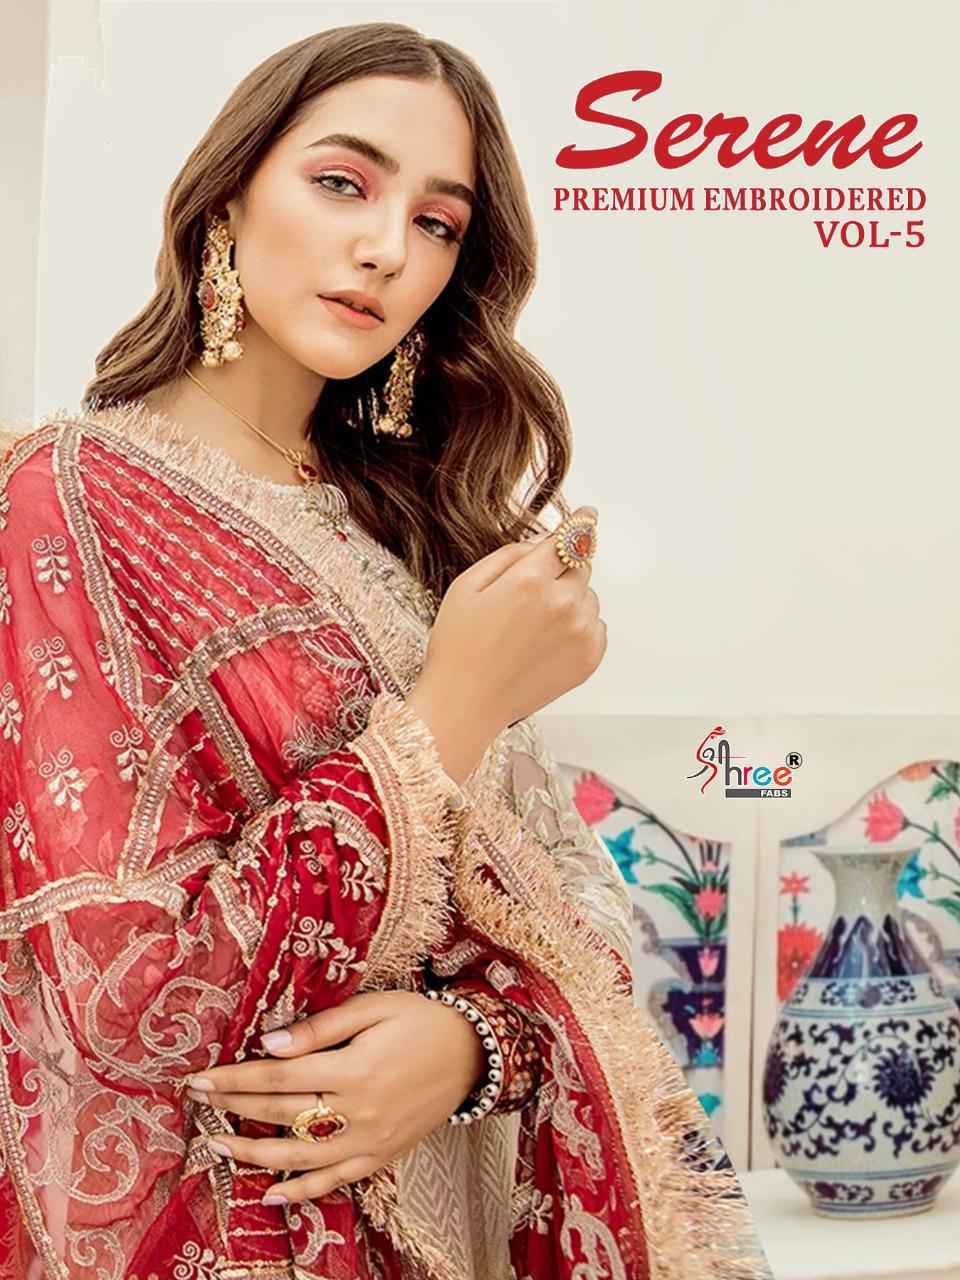 Shree fabs Serene Premium Embroidered vol 5 Pakistani Suit Supplier